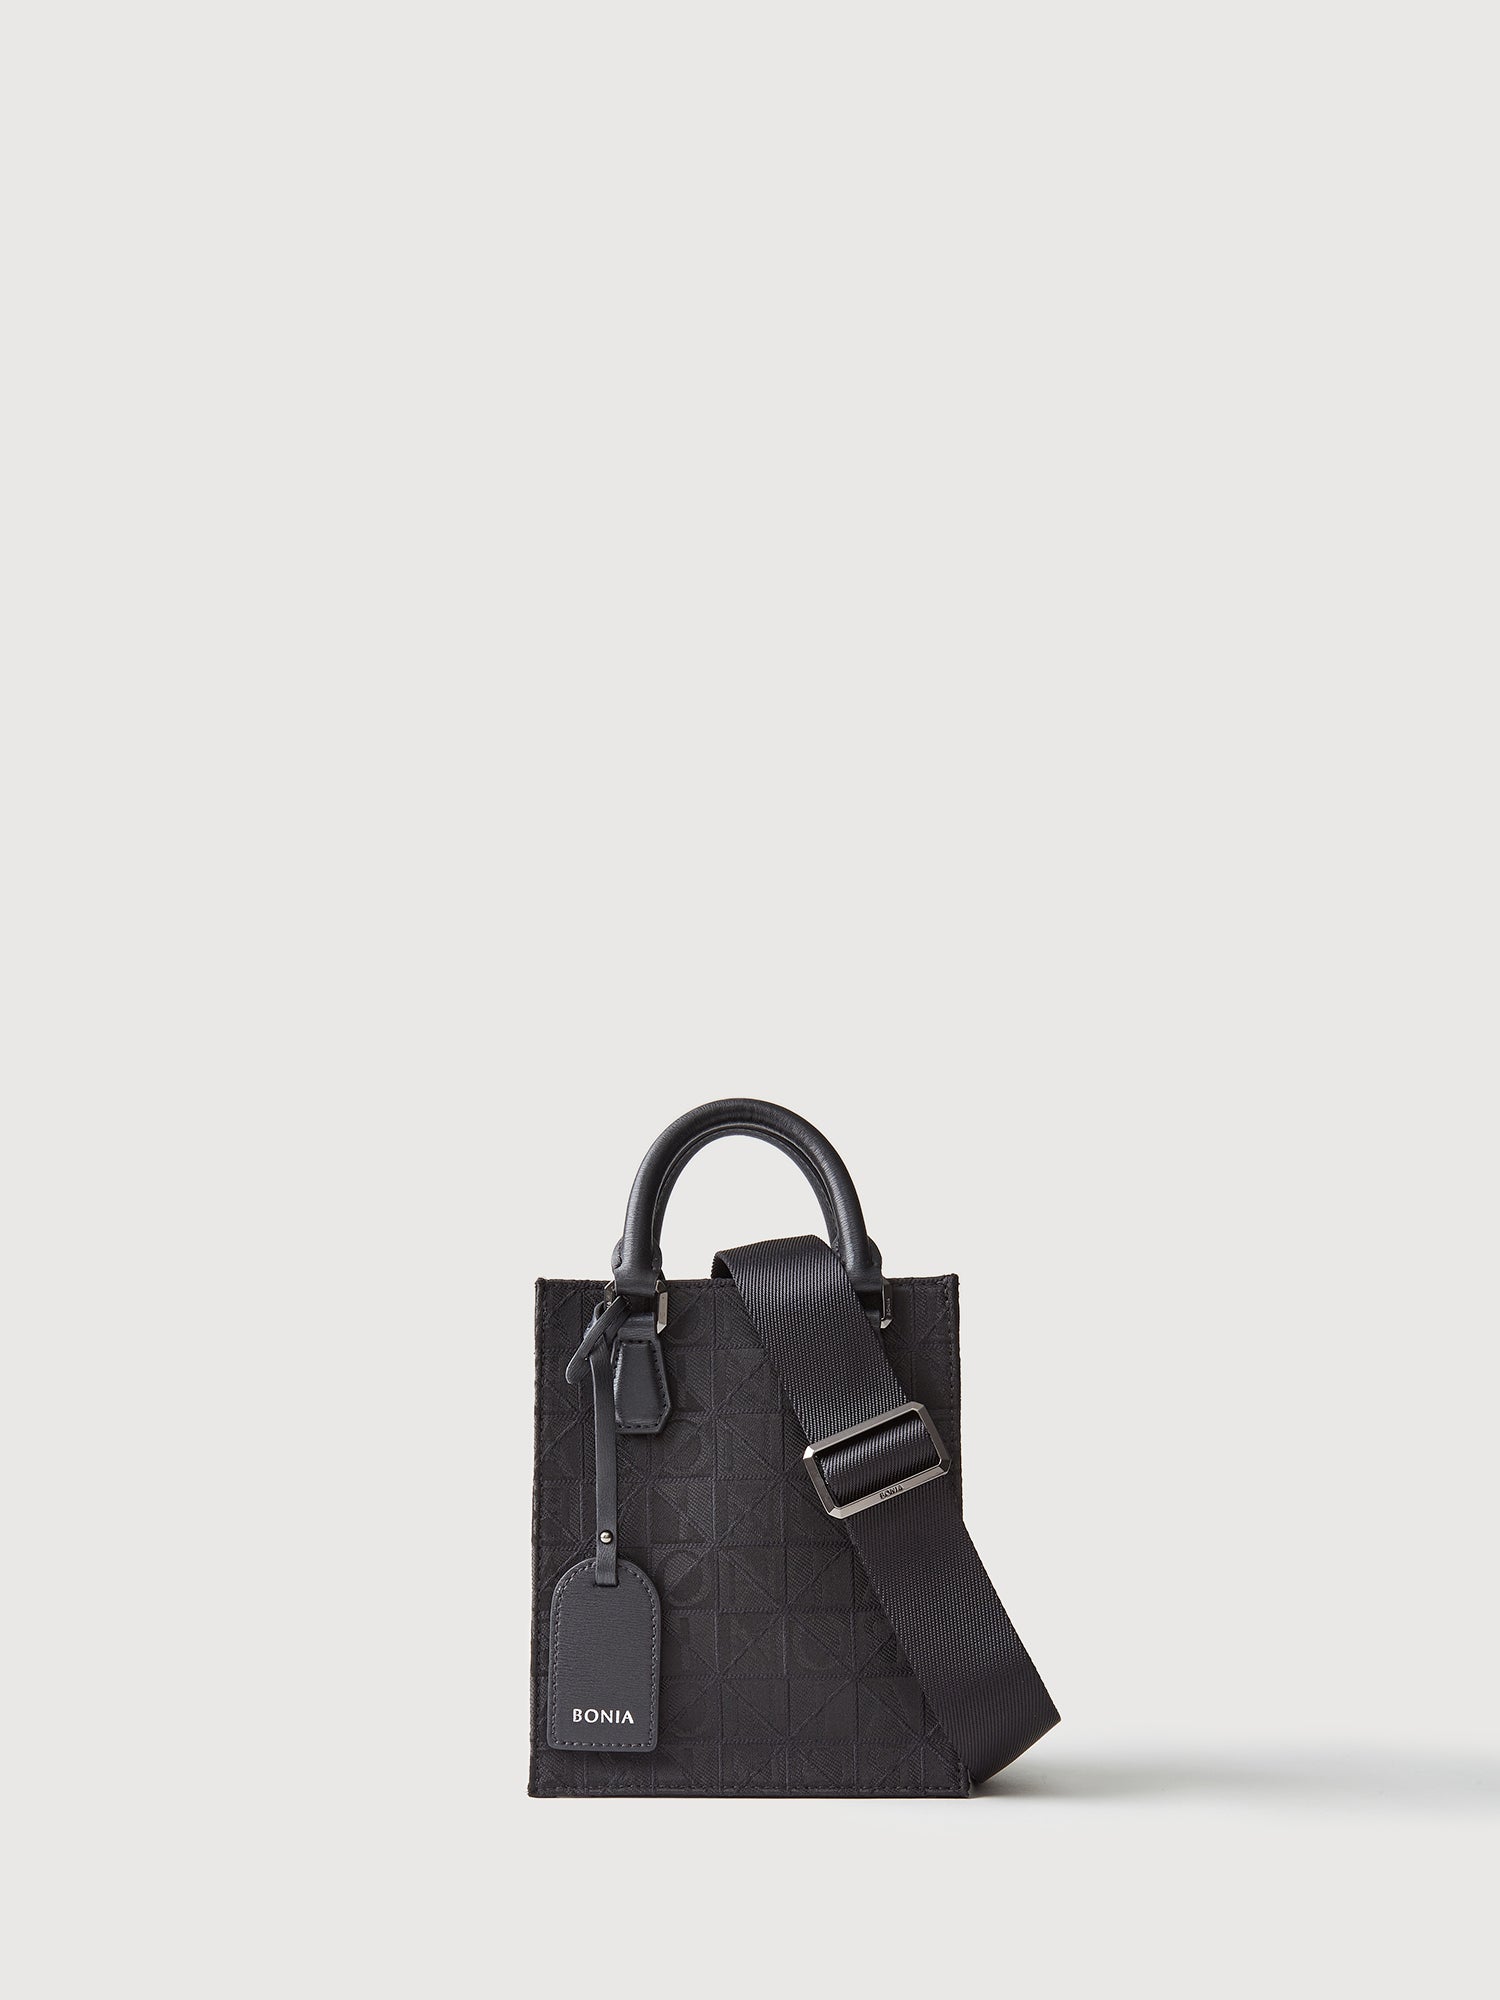 bonia black bag